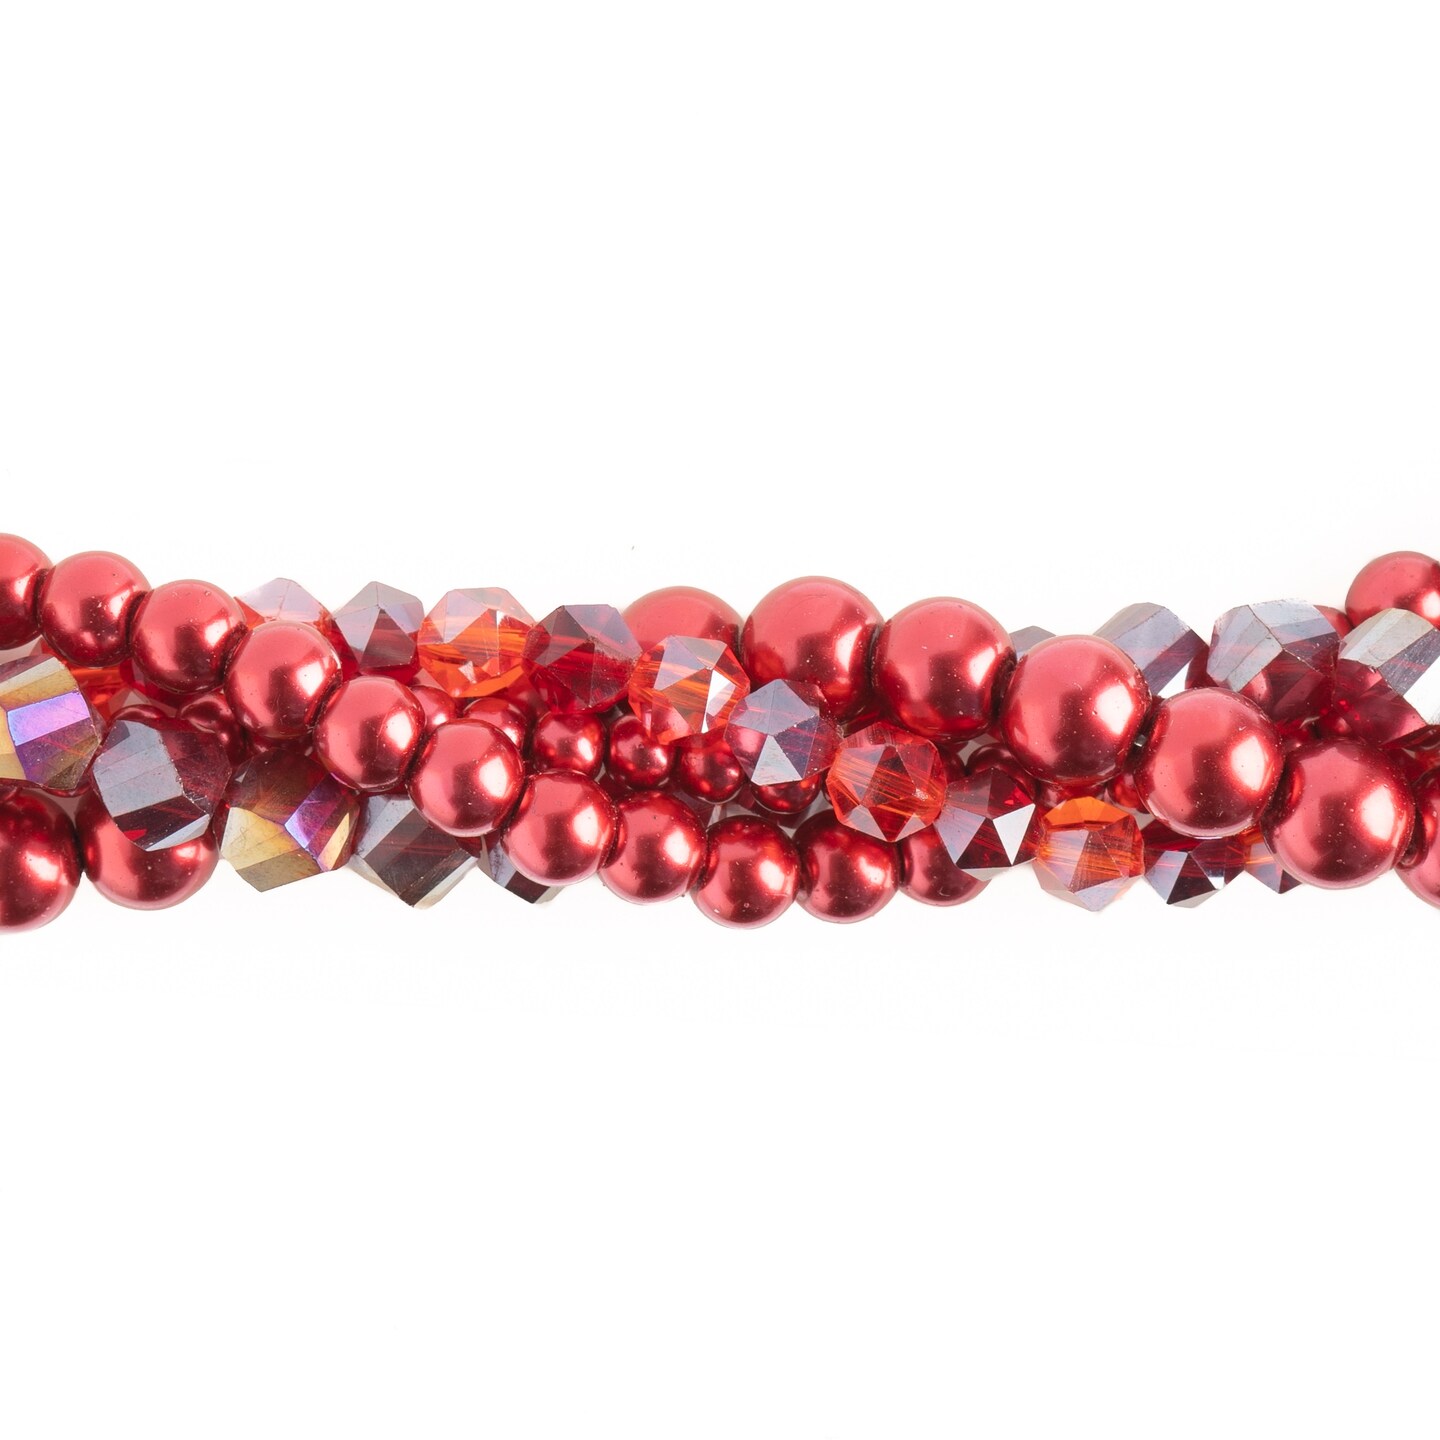 Crystal Lane DIY Dahlia Twisted Glass &#x26; Pearls Beads, 5 Strands